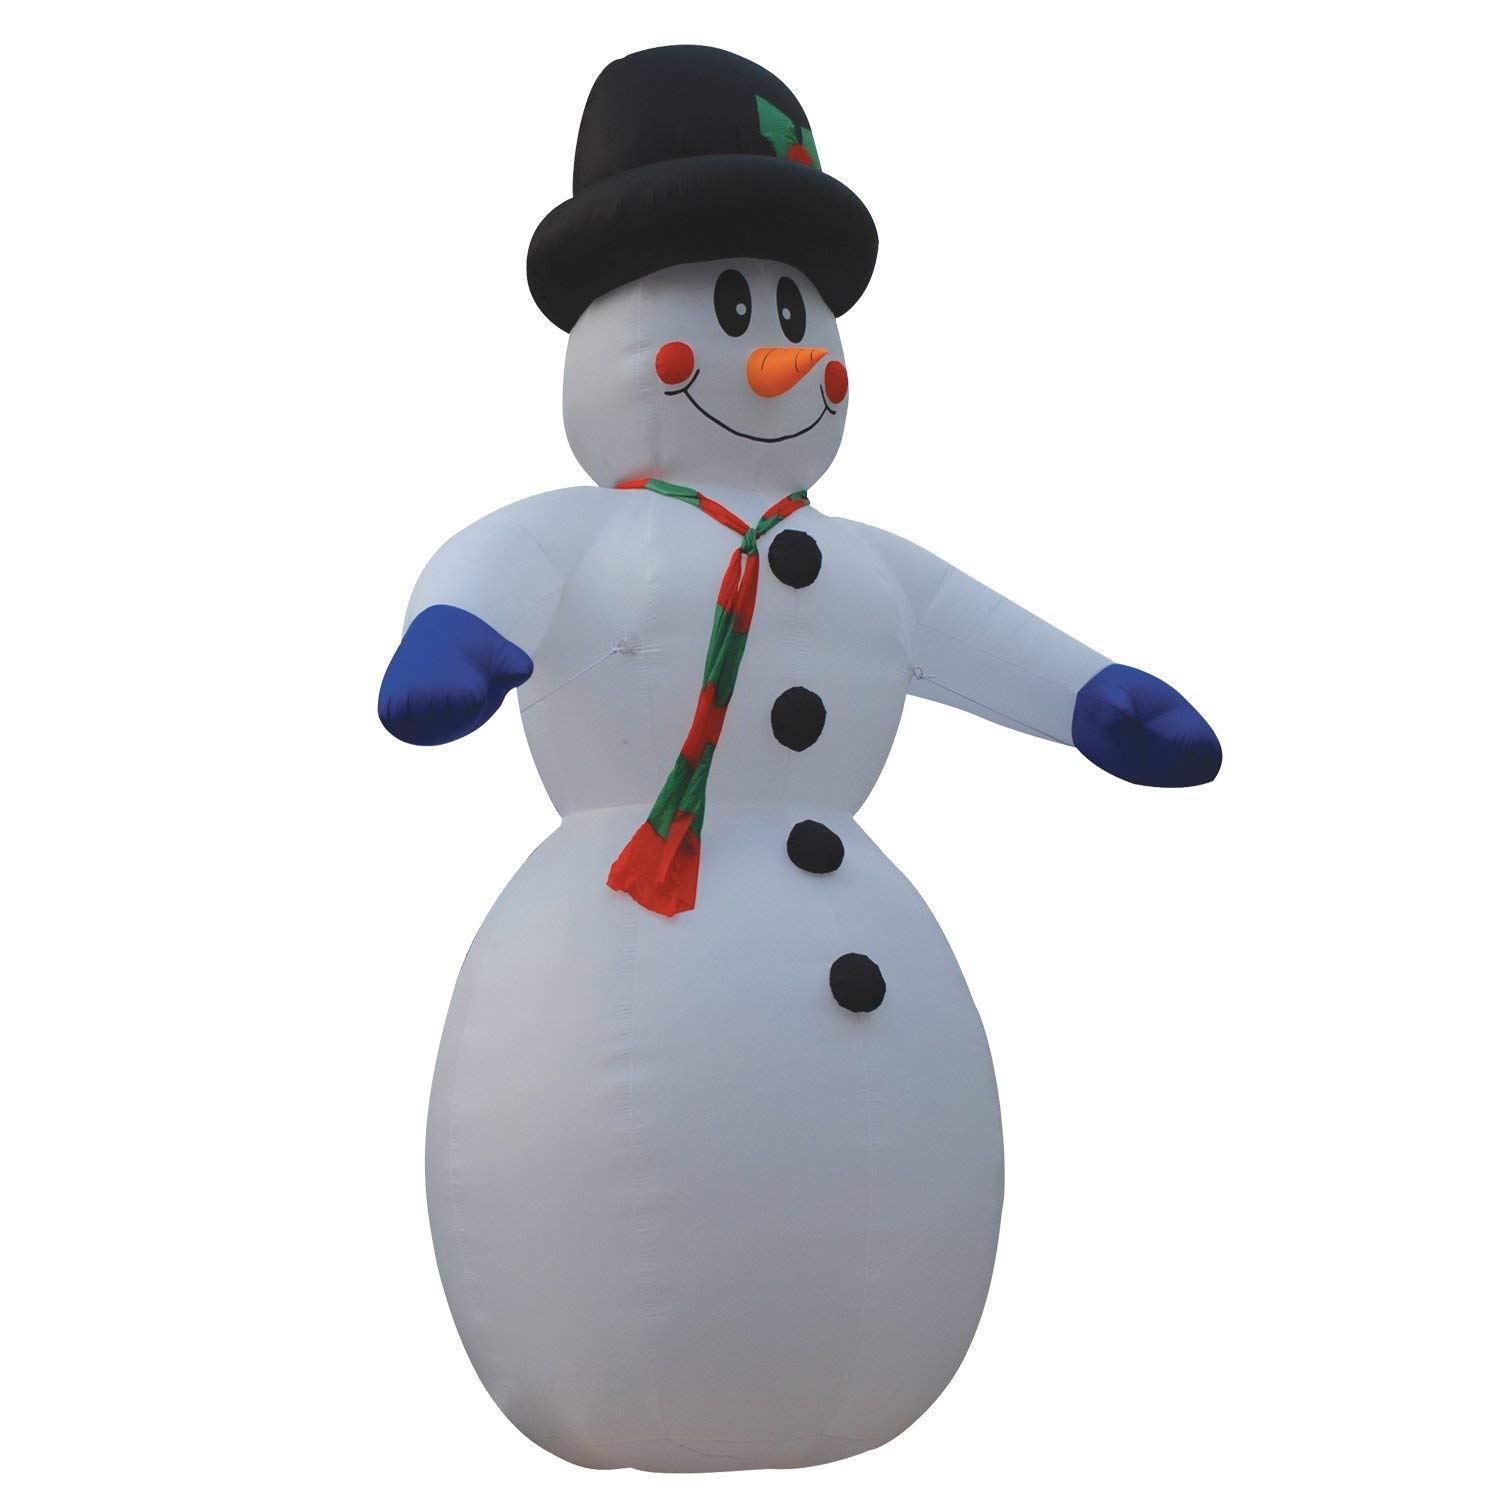 Amazon.com: 20 Foot Tall Inflatable Snowman: Garden & Outdoor